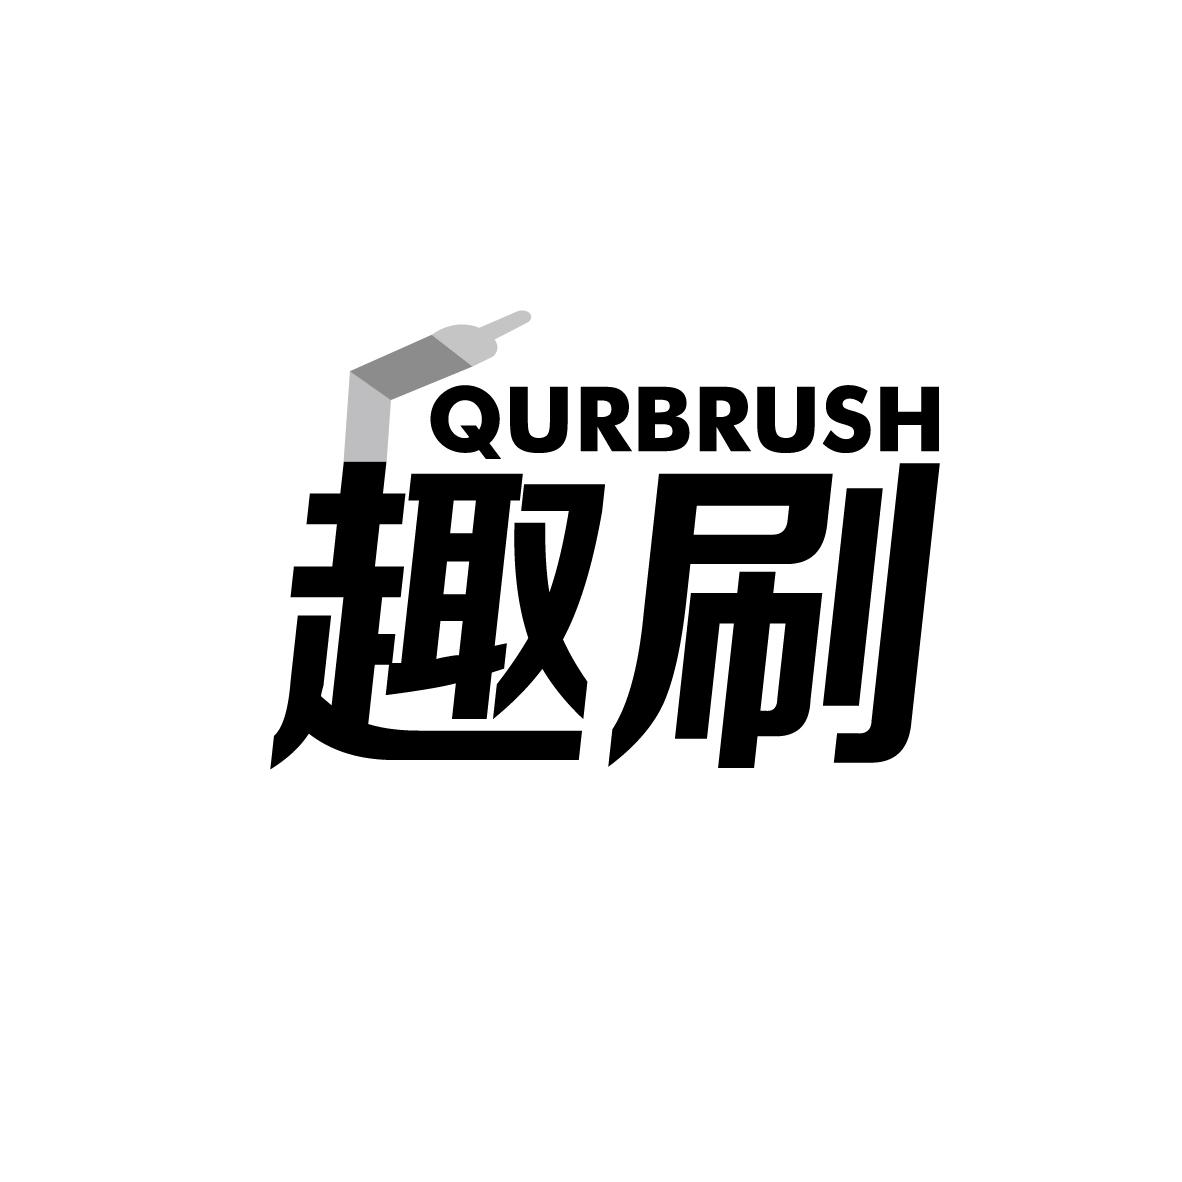 趣刷 QURBRUSH商标转让